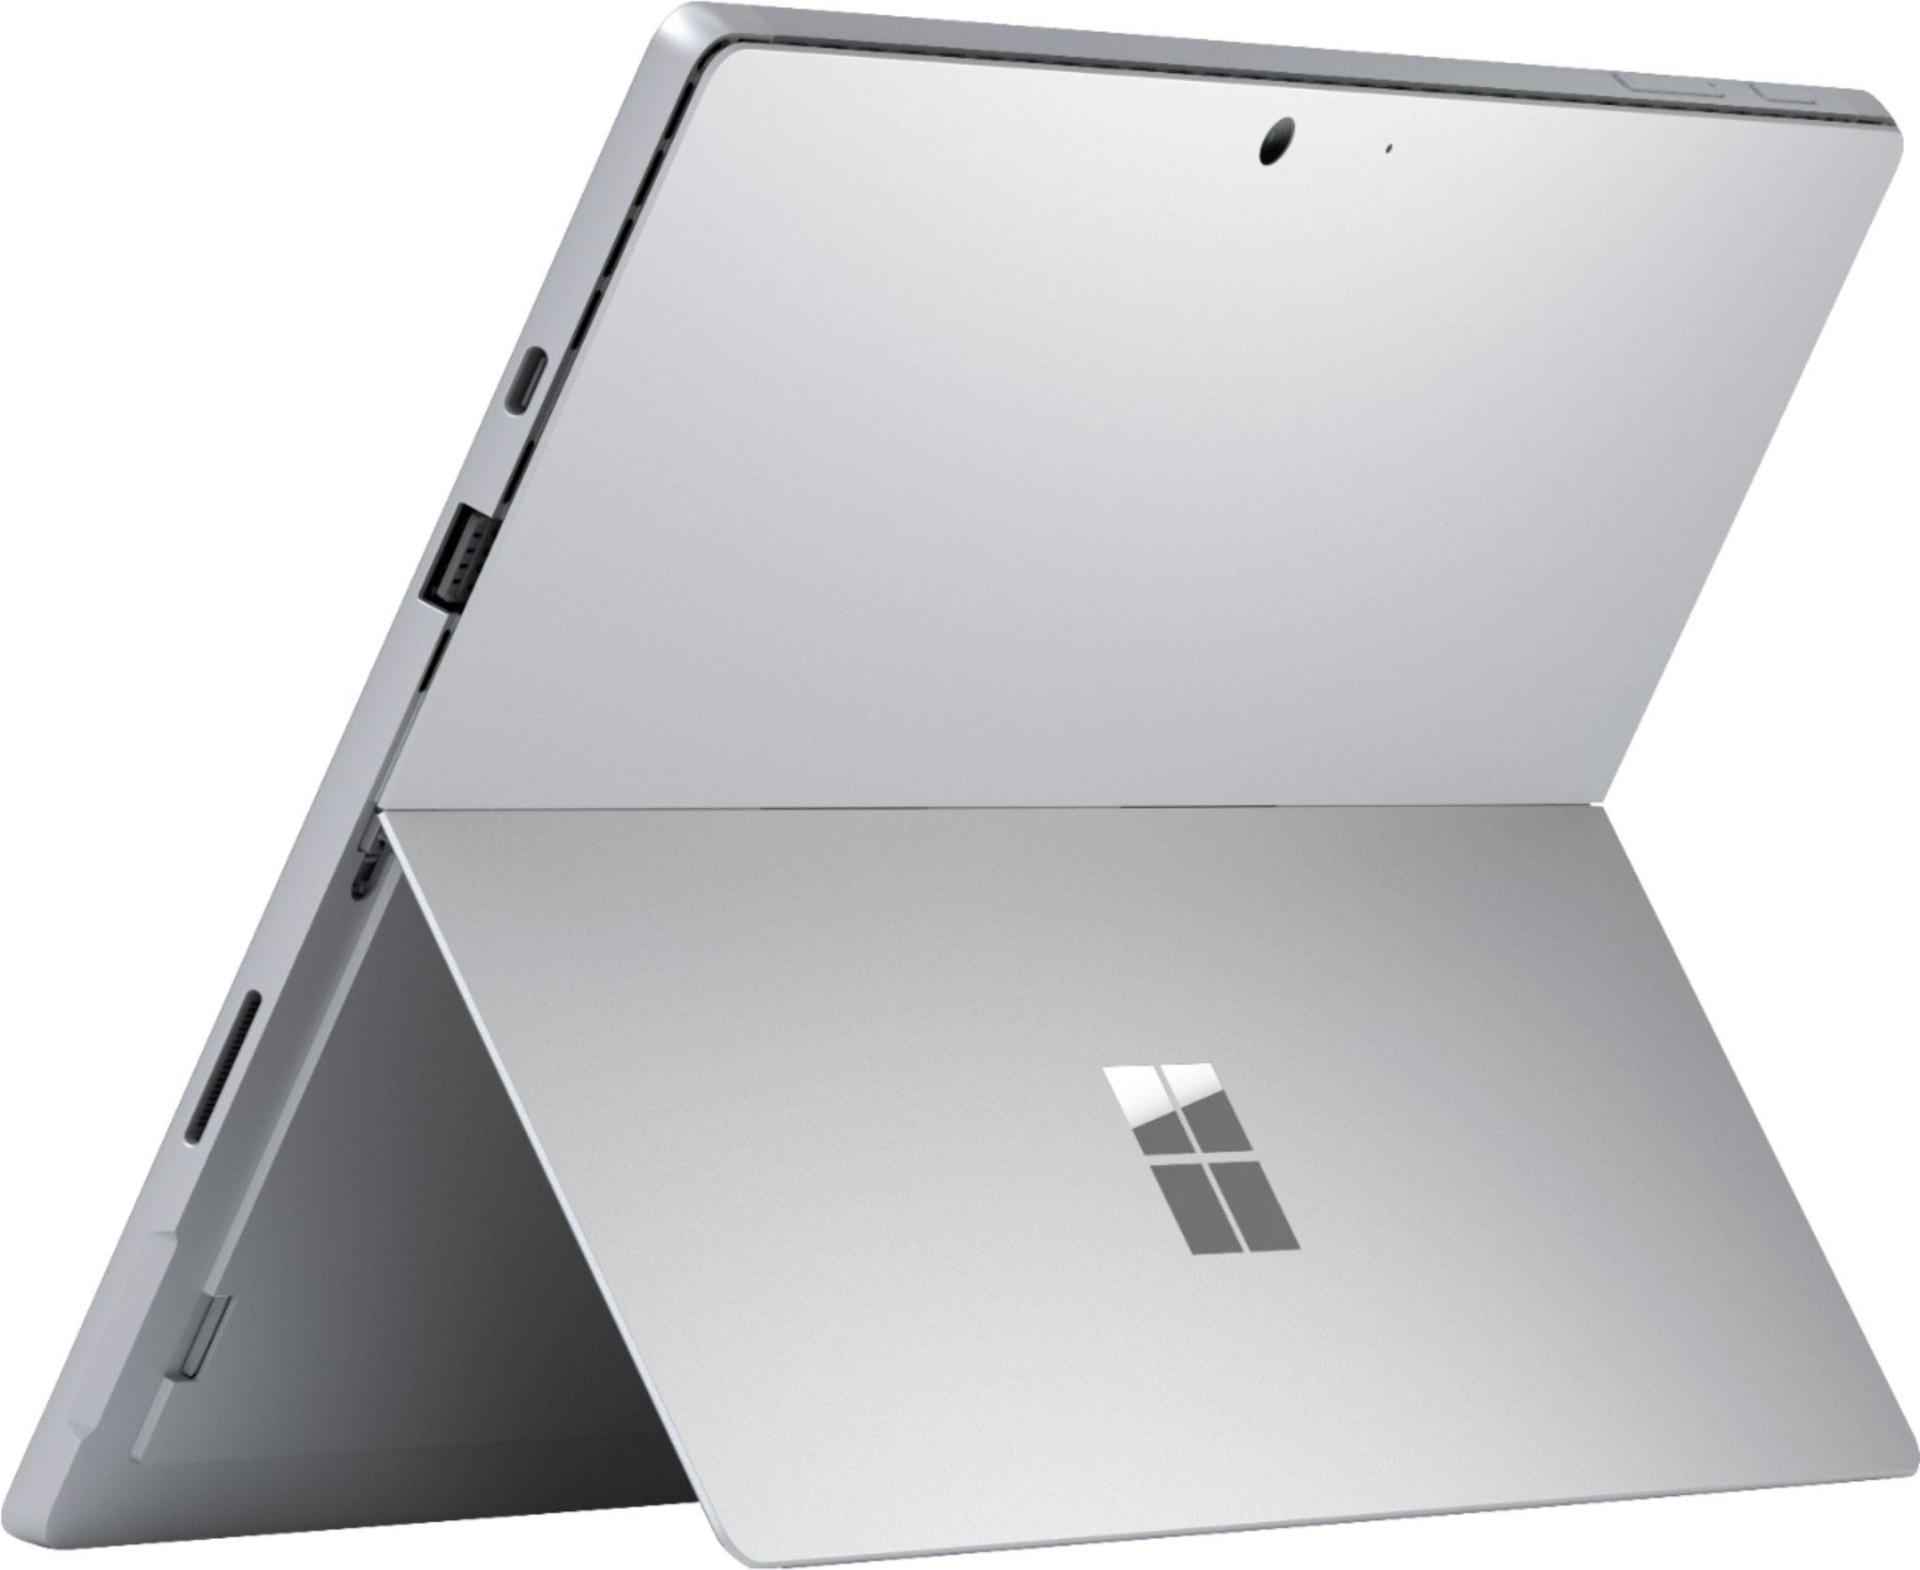 مرجع متخصصين ايران مايكروسافت سرفيس پرو 7 / Microsoft Surface Pro 7